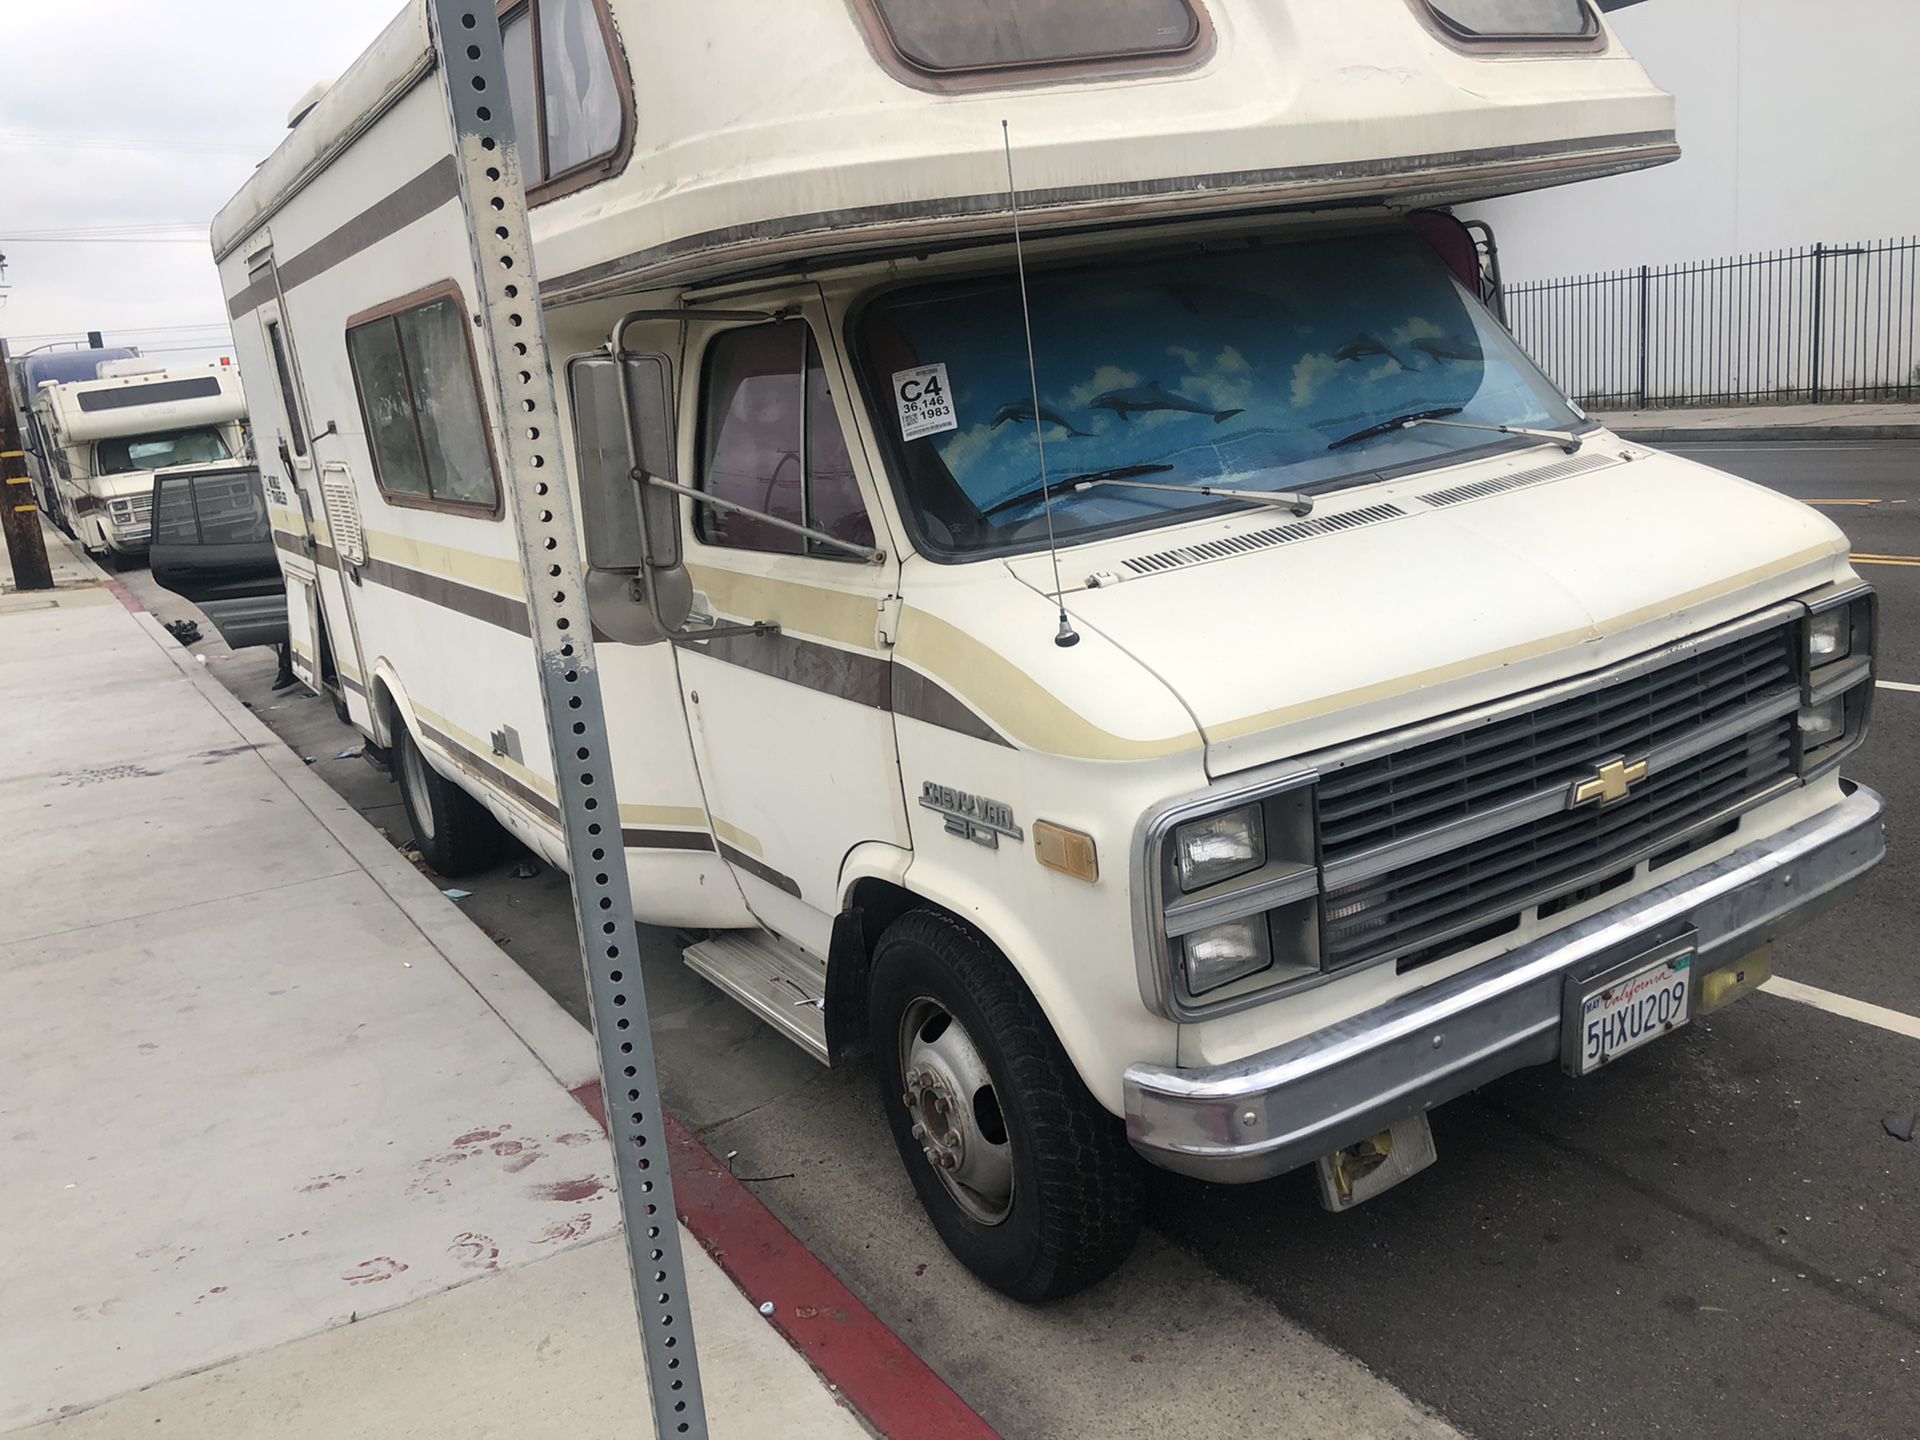 Chevy 83’ Mobil traveler